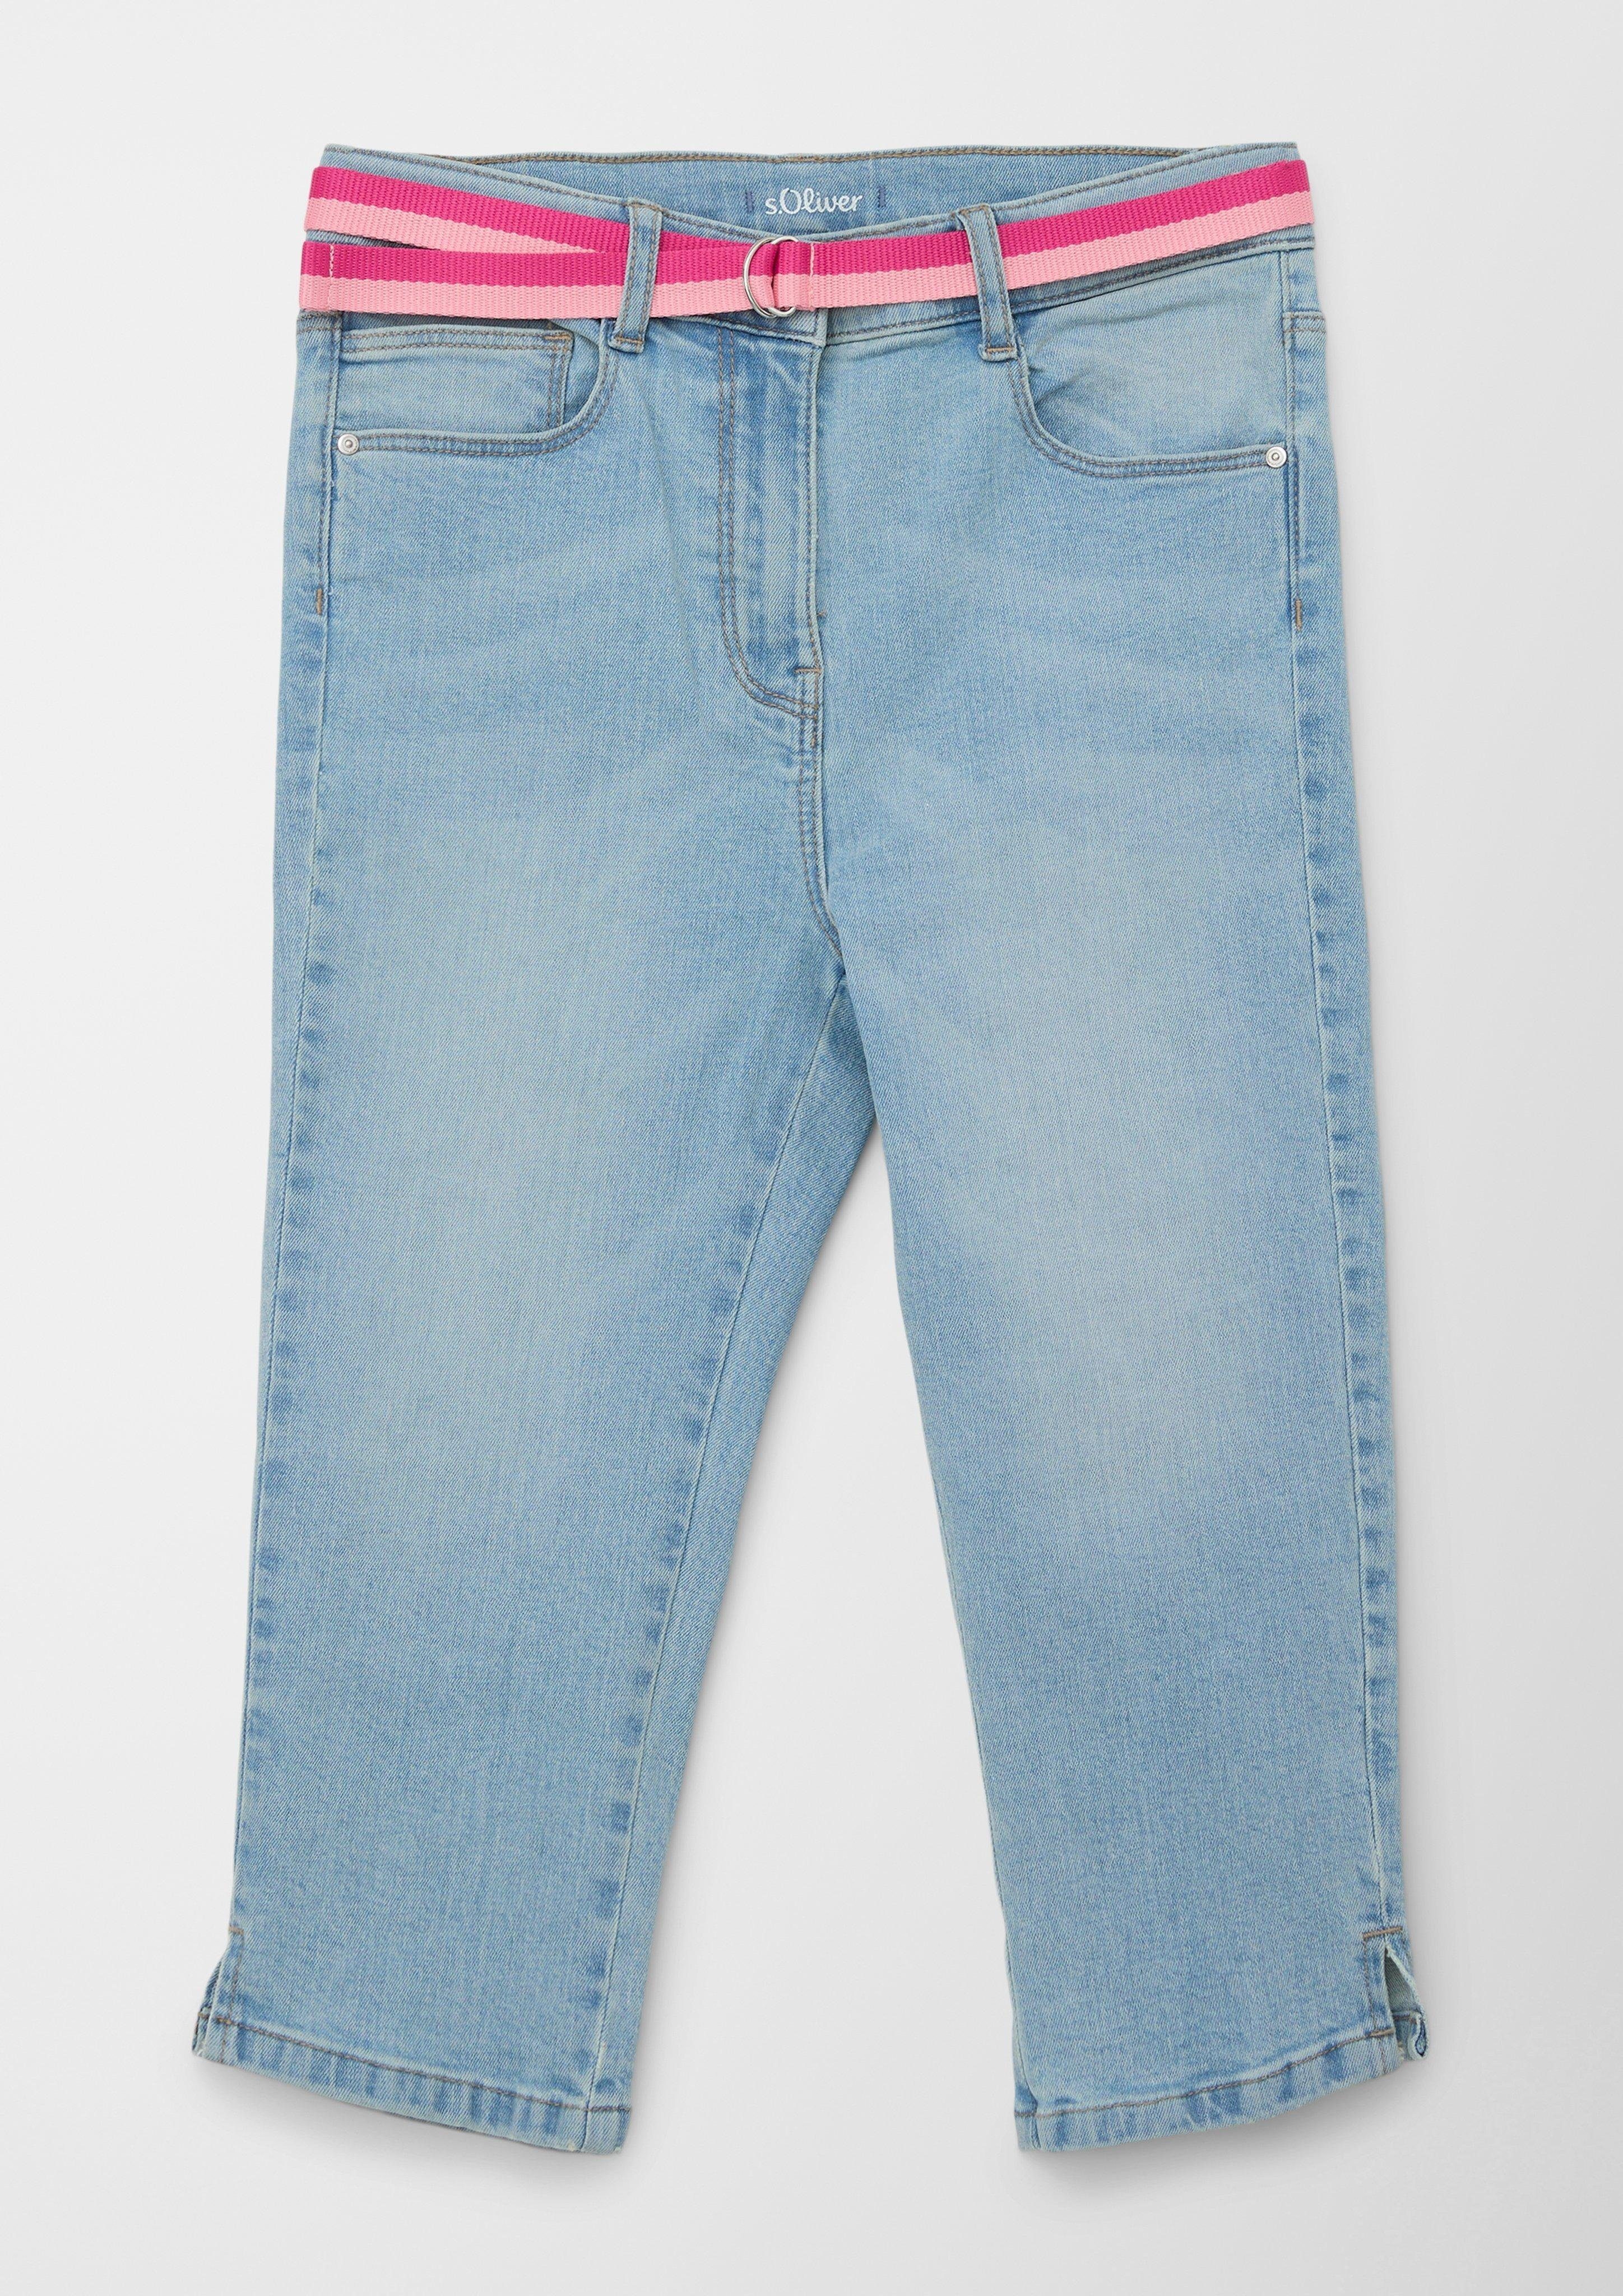 Rise Skinny Waschung / Suri Leg / High Capri-Jeans s.Oliver Skinny Skinny 5-Pocket-Jeans / Fit